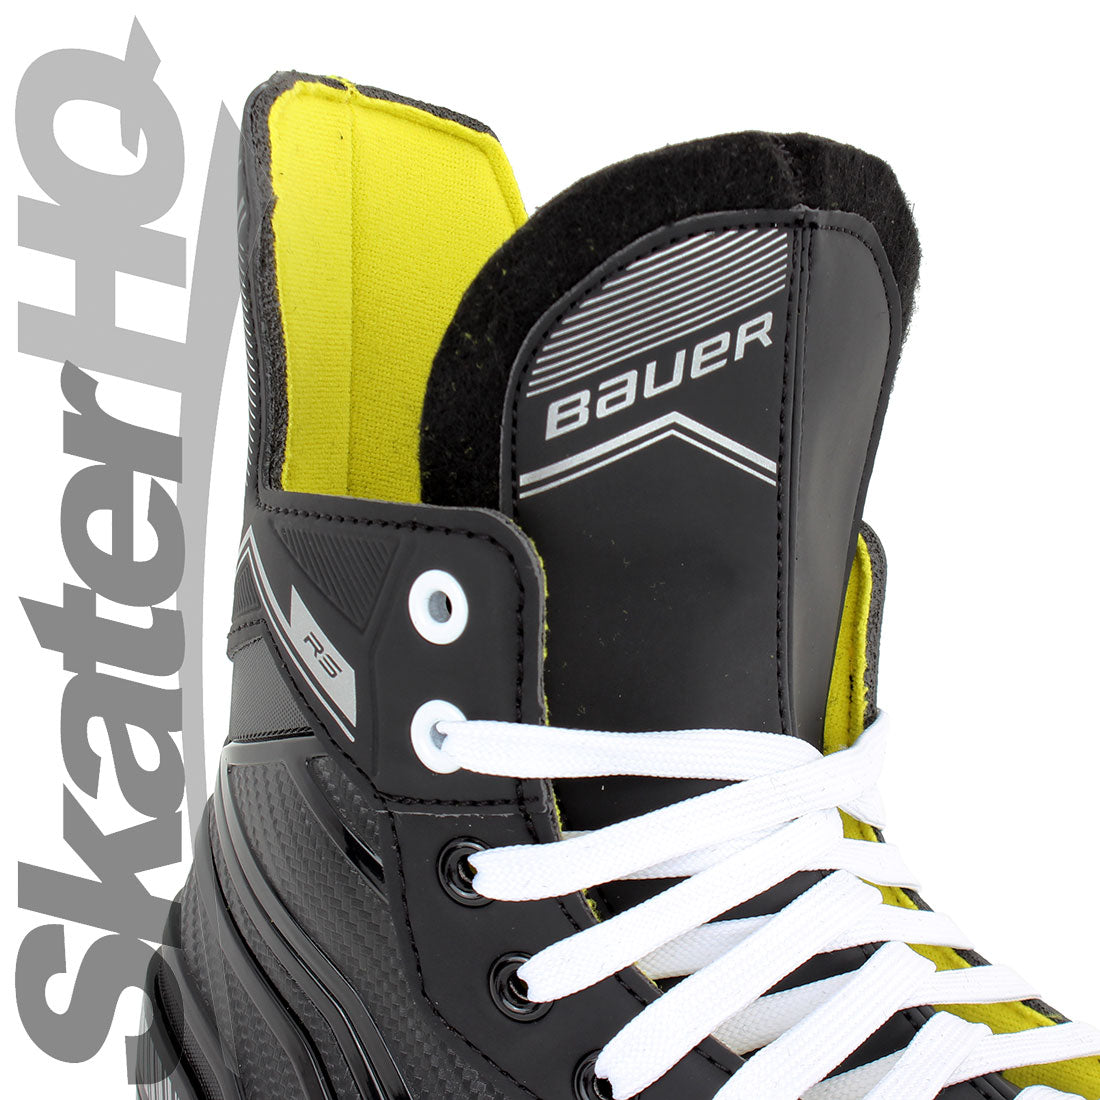 Bauer RS SR Black/Yellow 6.0 / 7.5US Inline Hockey Skates